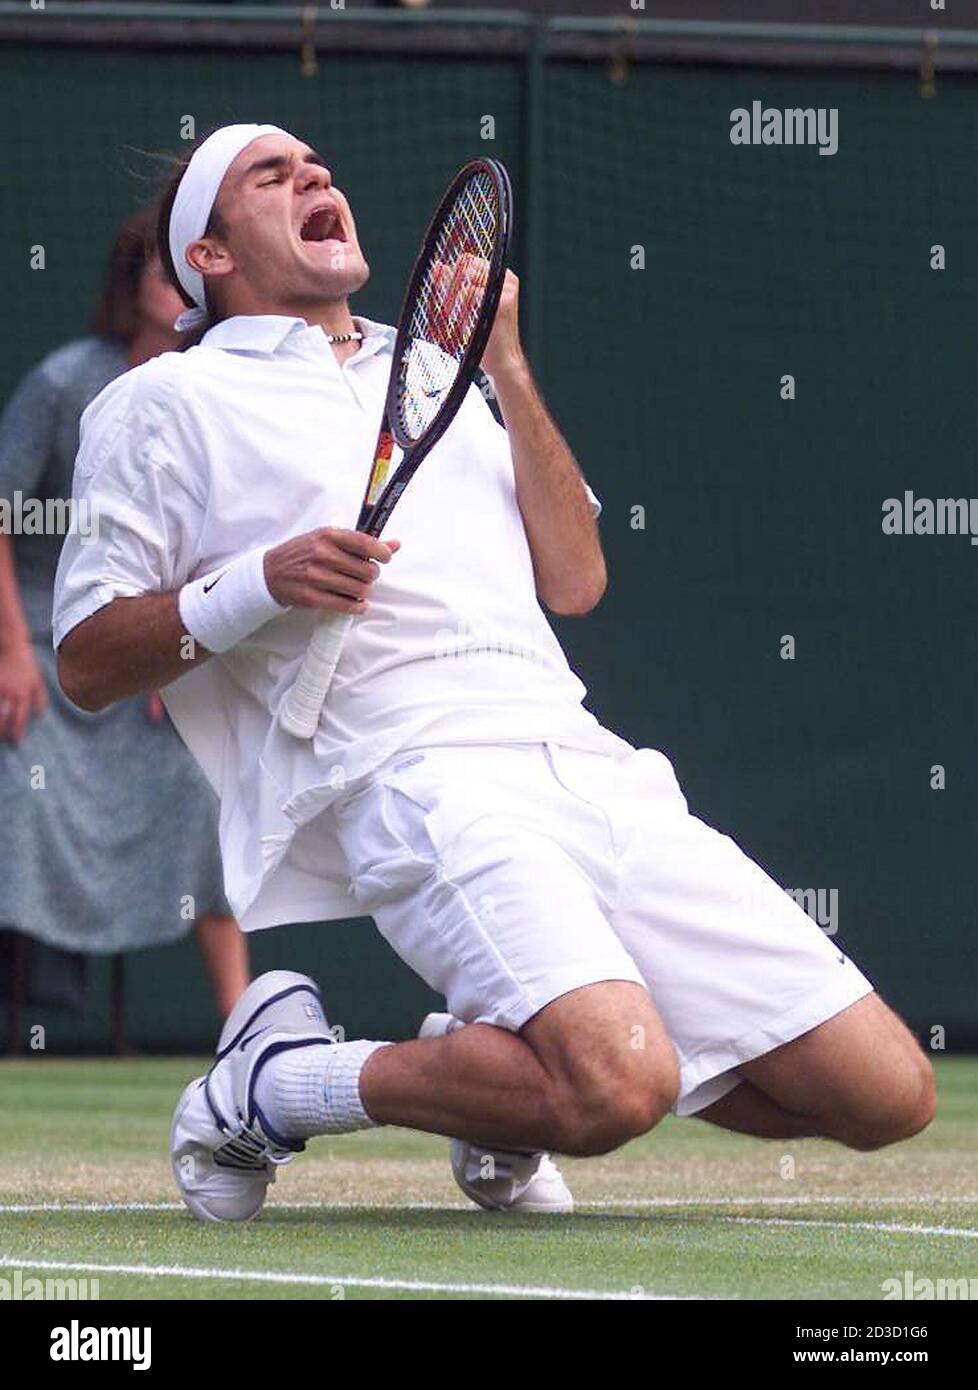 Wimbledon 2001 federer hi-res stock photography and images - Alamy